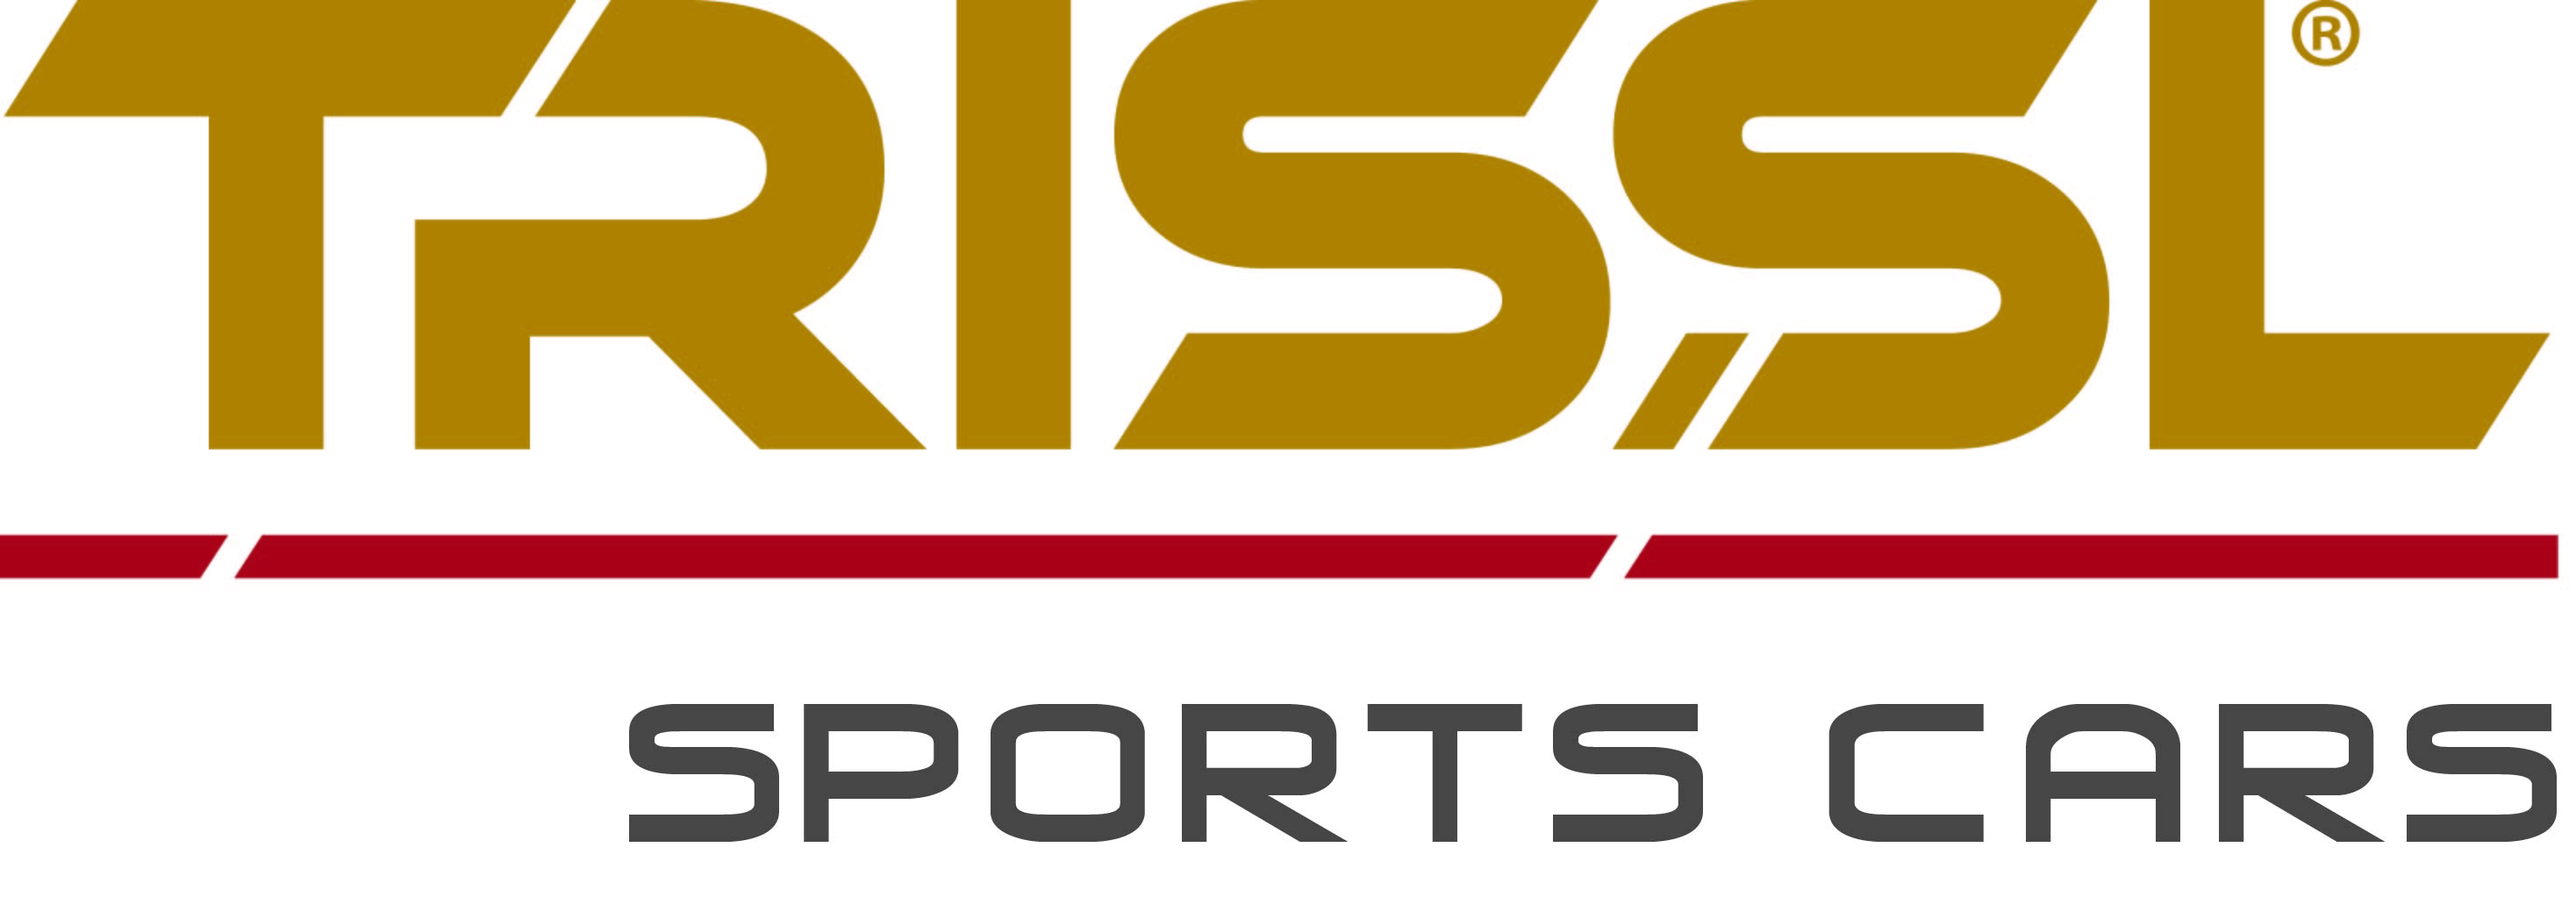 Trissl Sports Cars | Classic Driver